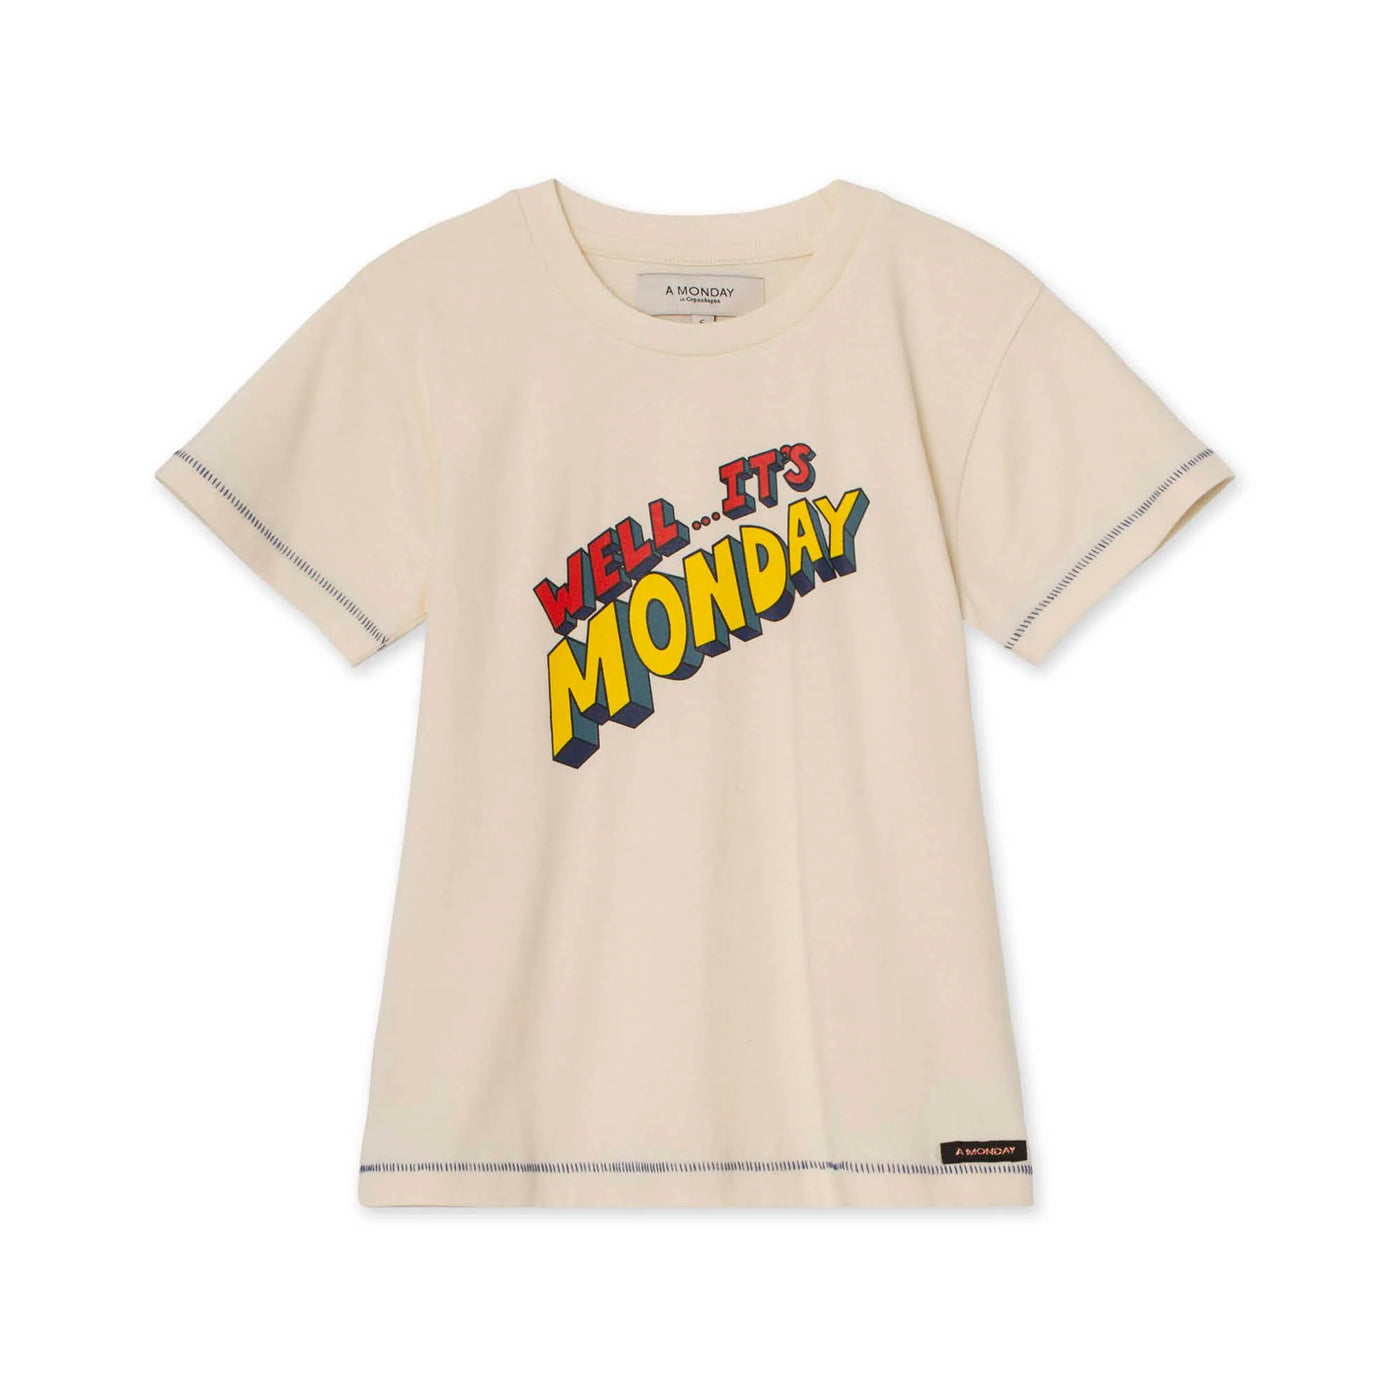 It’s Monday T-Shirt